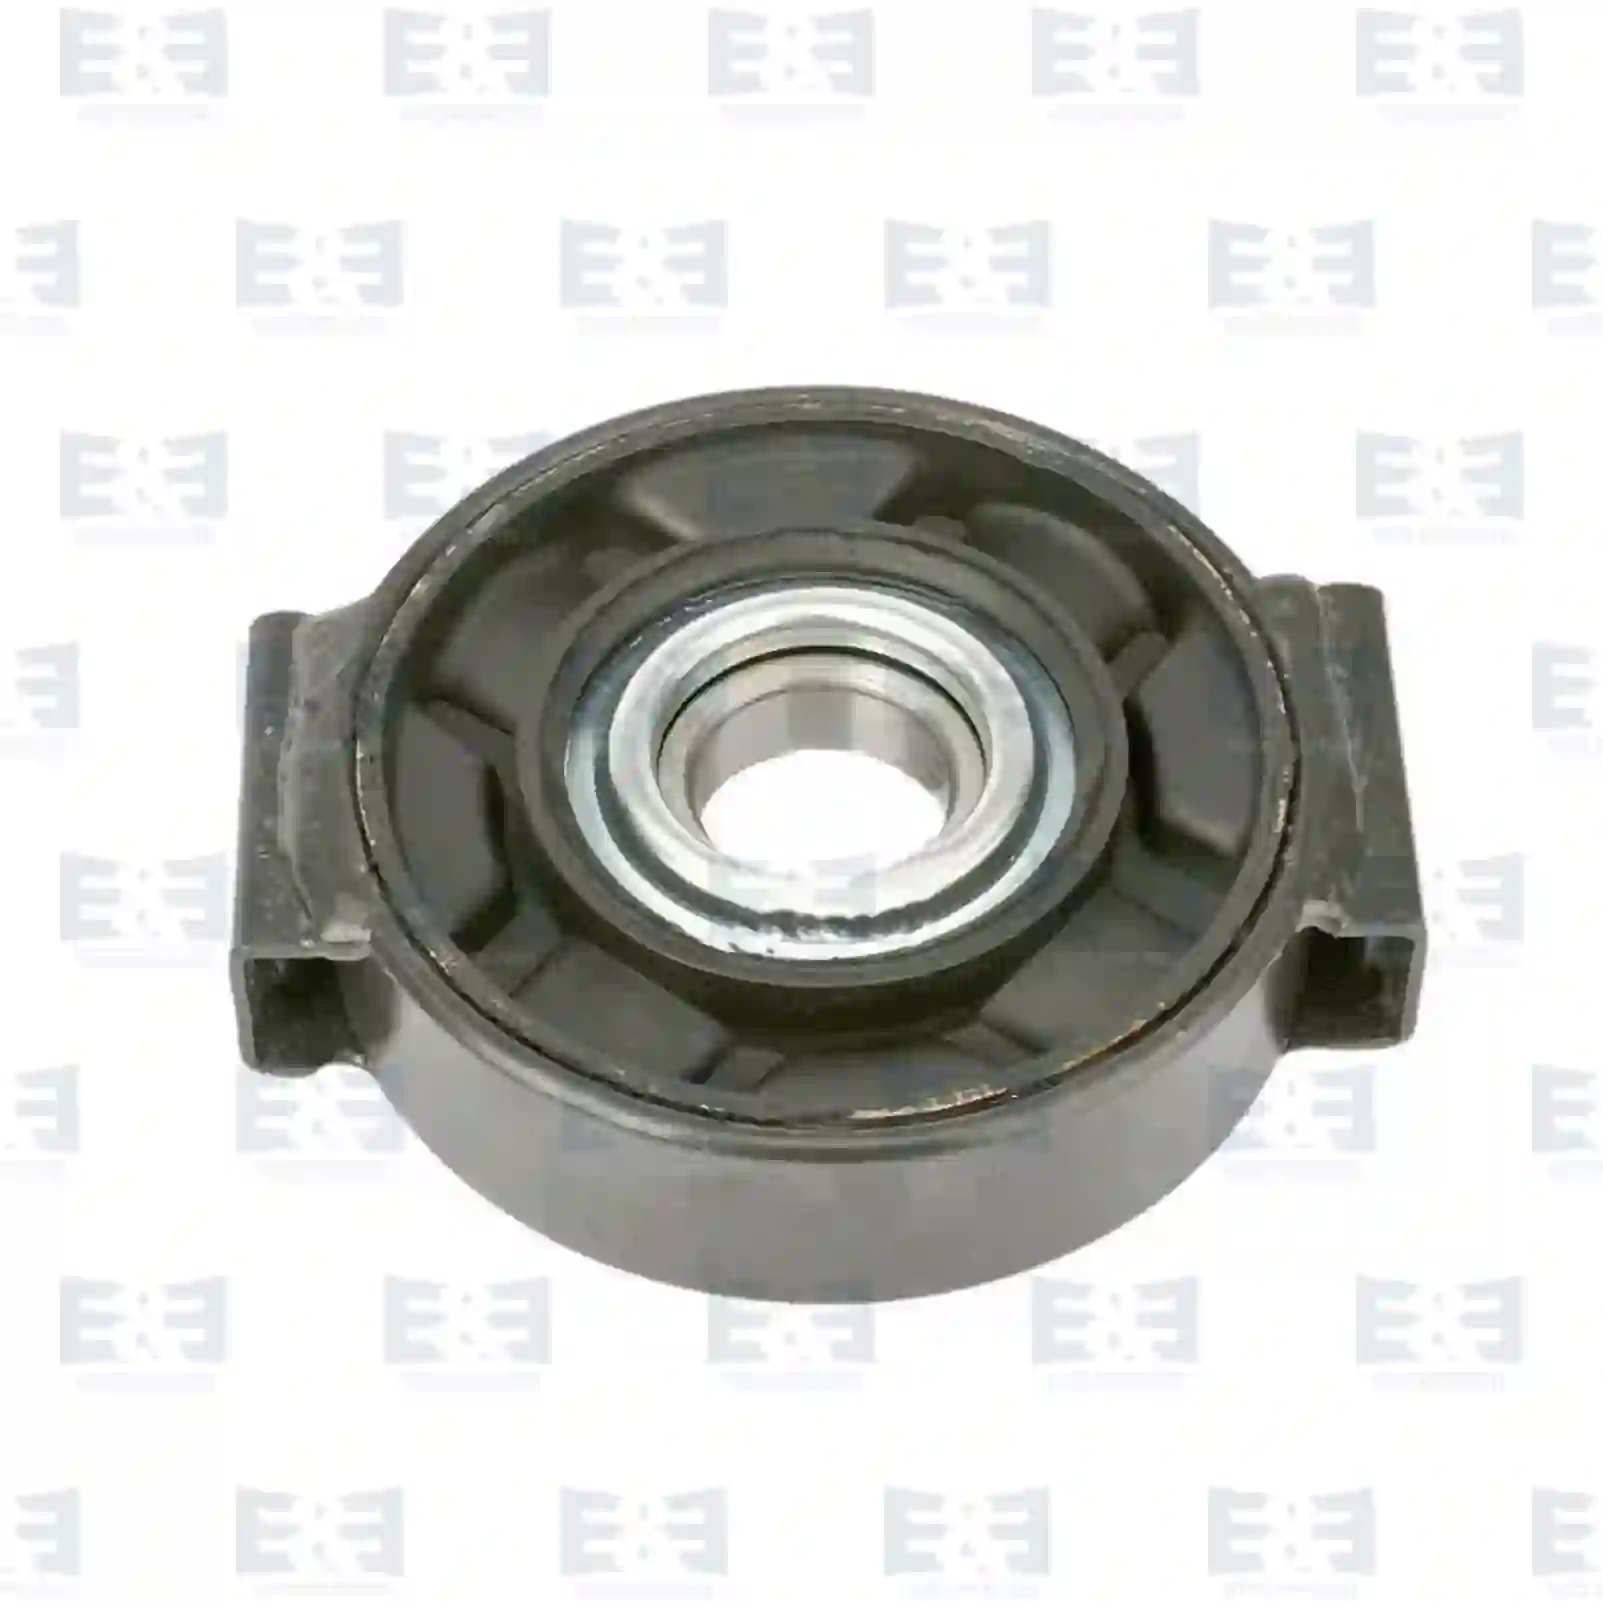  Center bearing || E&E Truck Spare Parts | Truck Spare Parts, Auotomotive Spare Parts